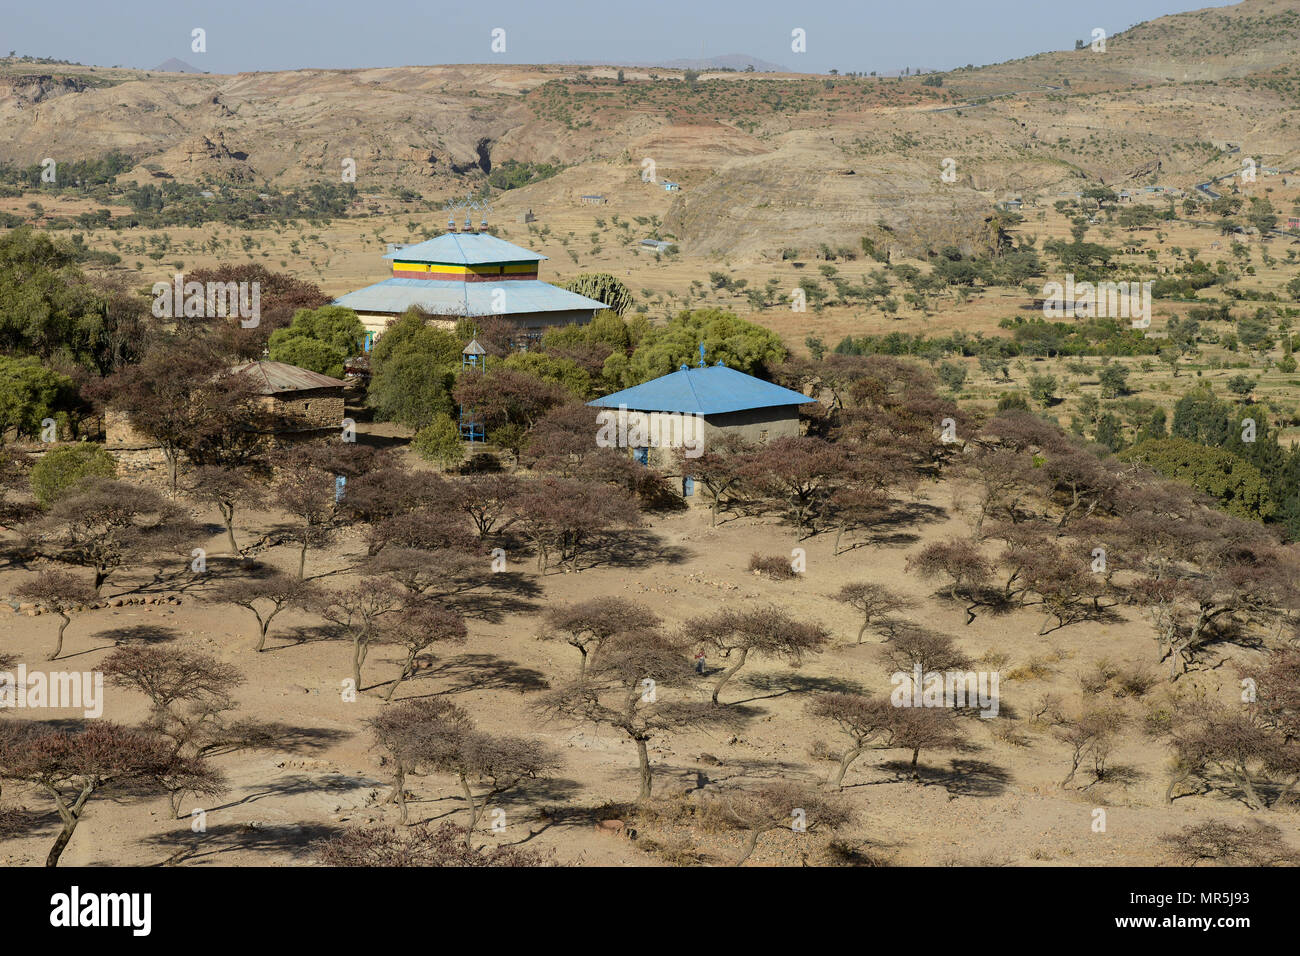 ETHIOPIA, Tigray, near Adwa, ethiopian highlands, orthodox church in landscape / AETHIOPIEN, Tigray, Hochland, orthodoxe Kirche in der Landschaft Stock Photo